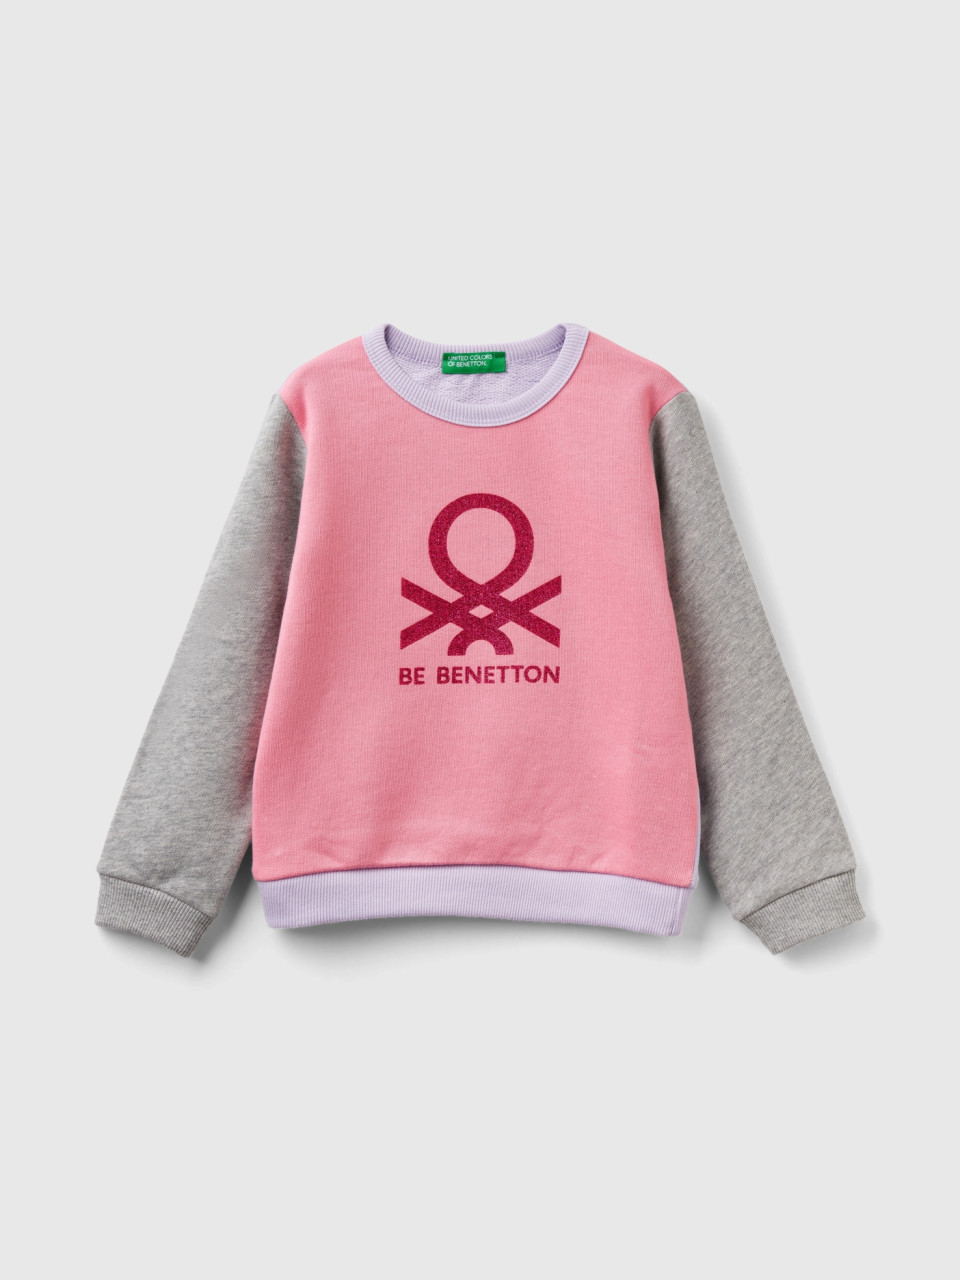 Benetton, 100% Organic Cotton Sweatshirt With Logo, Multi-color, Kids